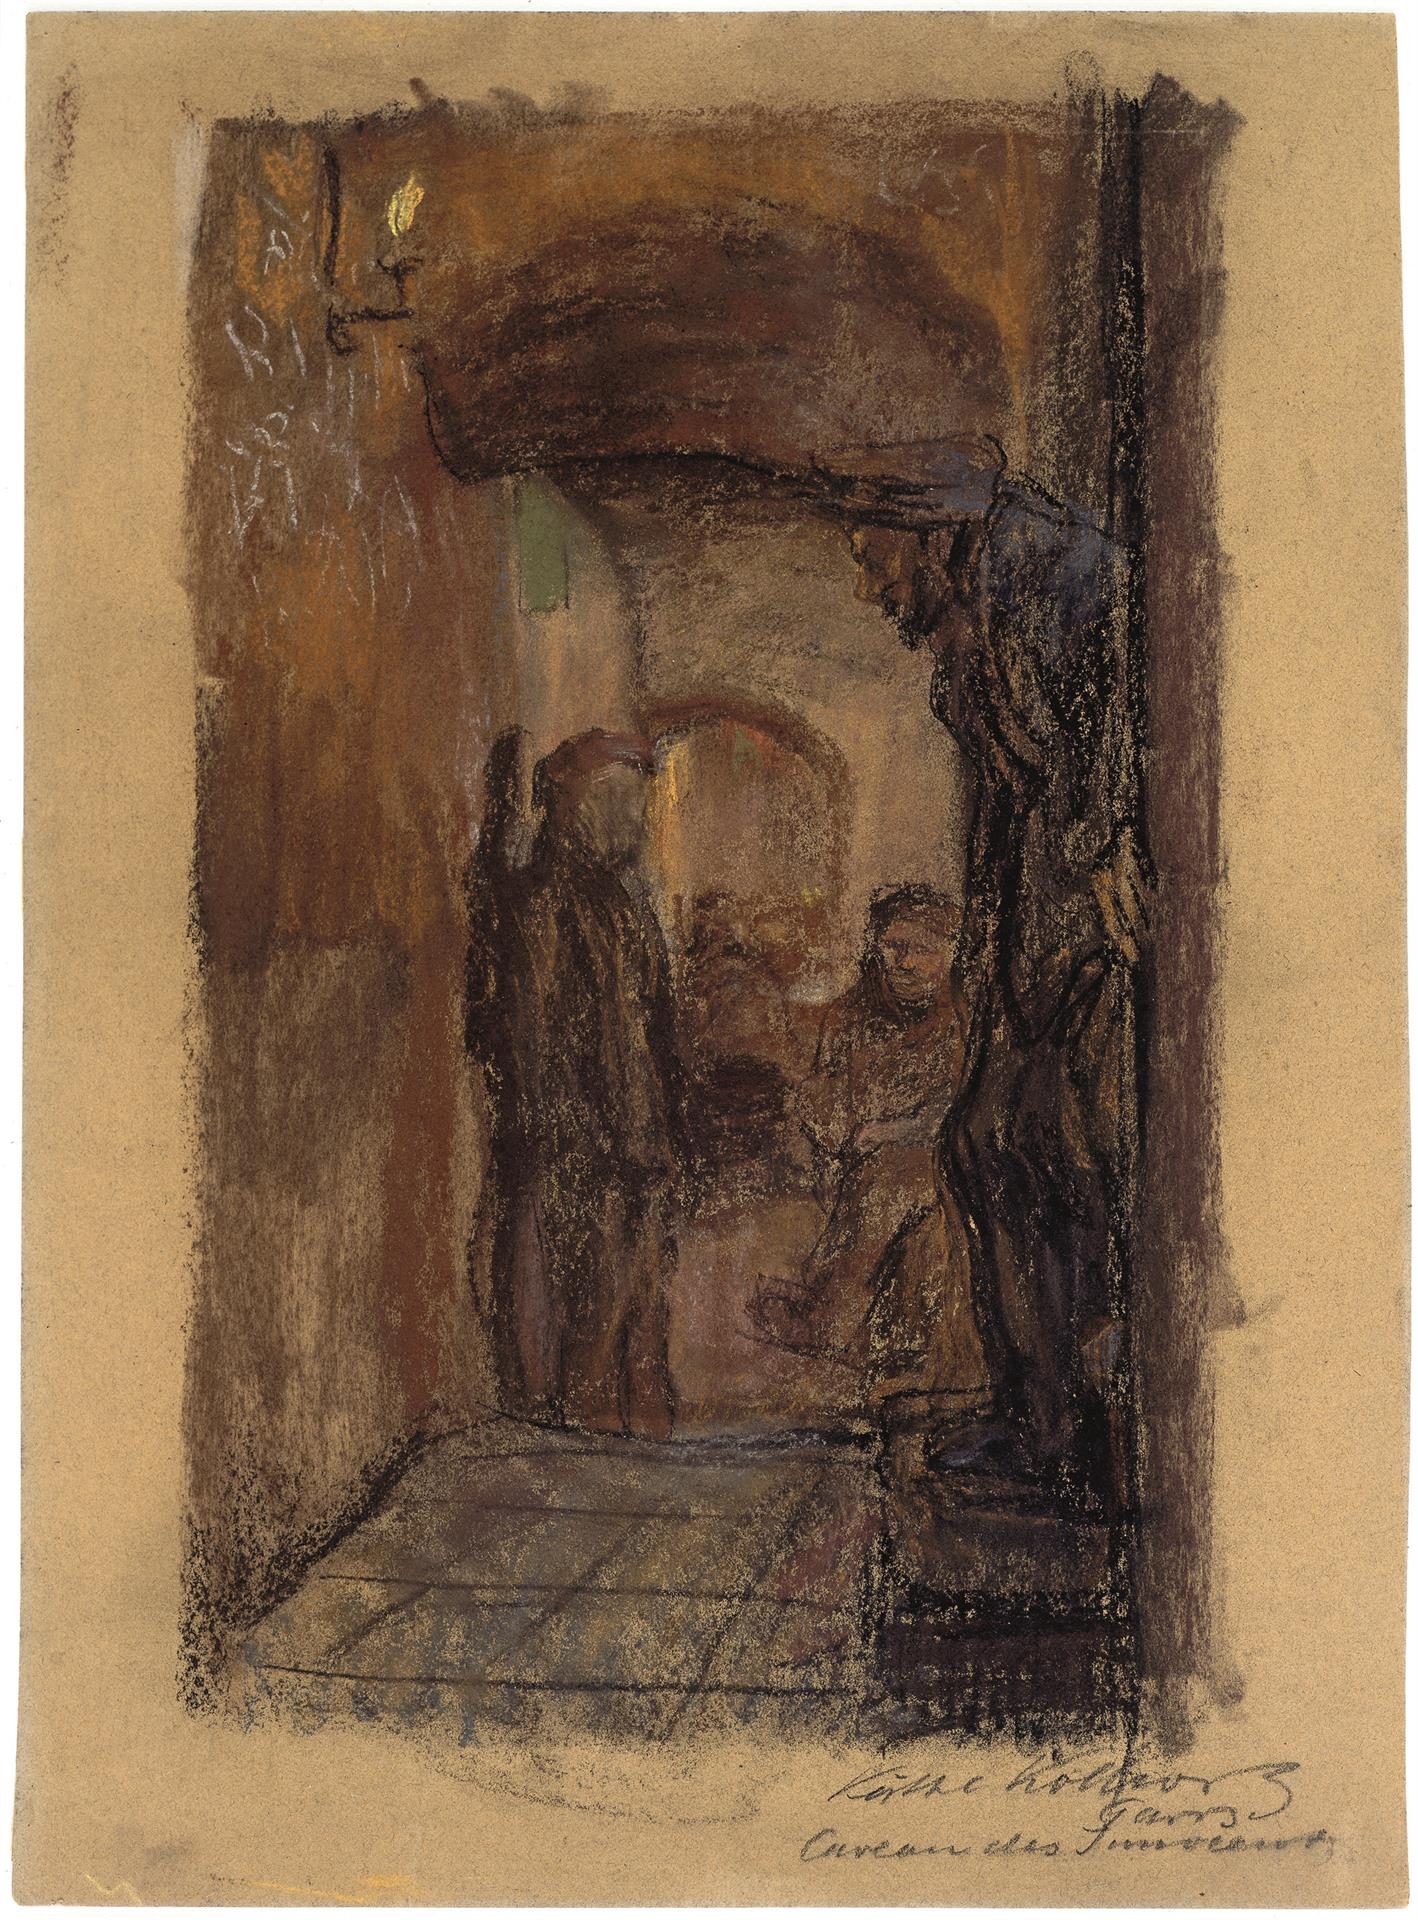 Käthe Kollwitz, Caveau des Innocents, 1904, pastels sur carton brunâtre, NT 275, Collection Kollwitz de Cologne © Käthe Kollwitz Museum Köln